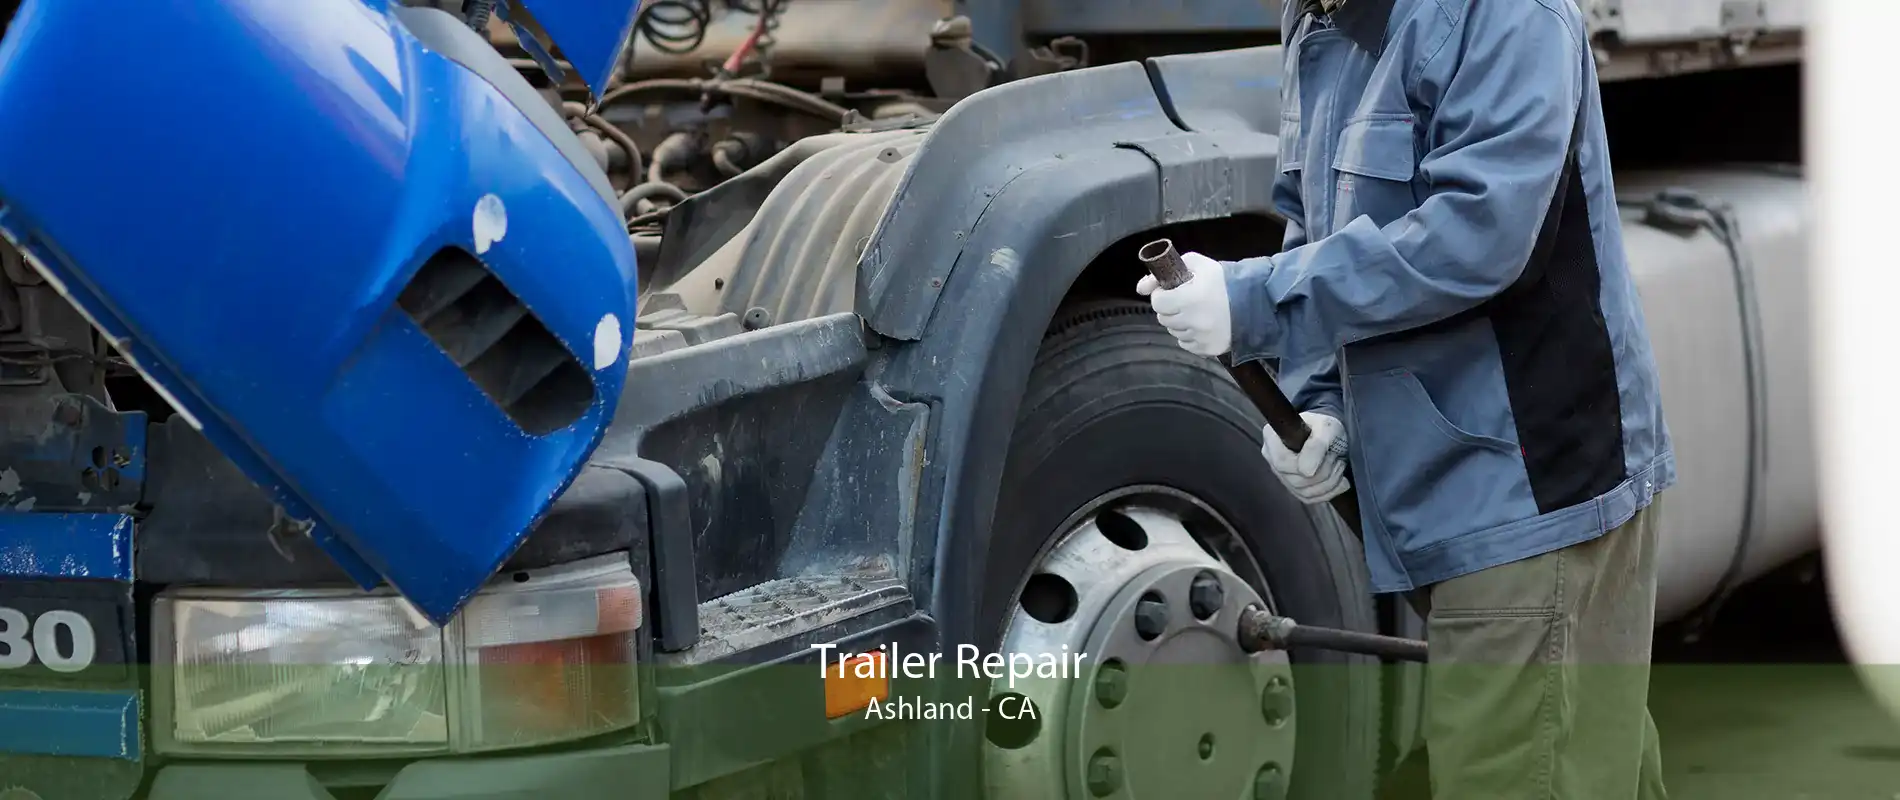 Trailer Repair Ashland - CA